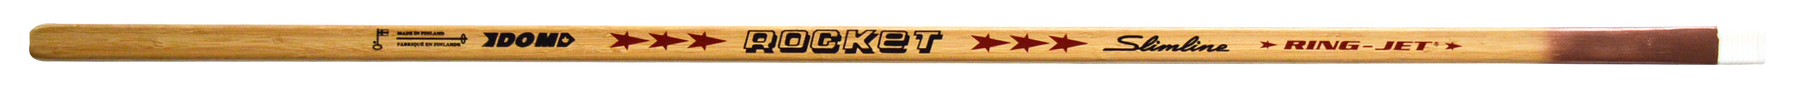 Ring-Jet Rocket Slimline 50" Ringette Stick